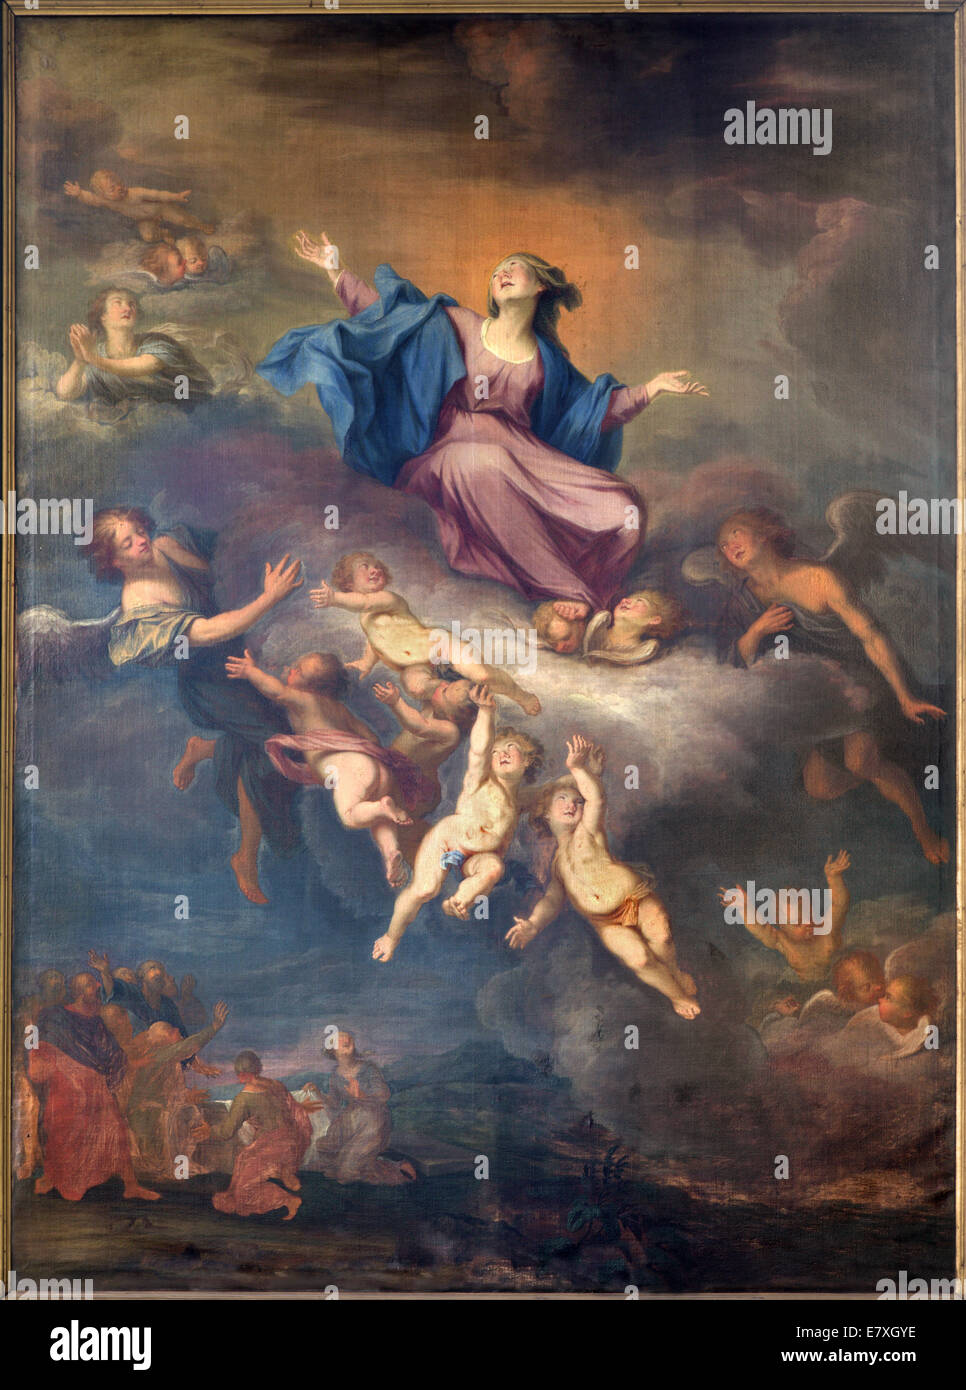 Brügge, Belgien - 12. Juni 2014: Die Himmelfahrt der Jungfrau Maria durch M. Vanduvene vom 17. Jhdt. in st. Jacobs Kirche (Jakobskerk). Stockfoto